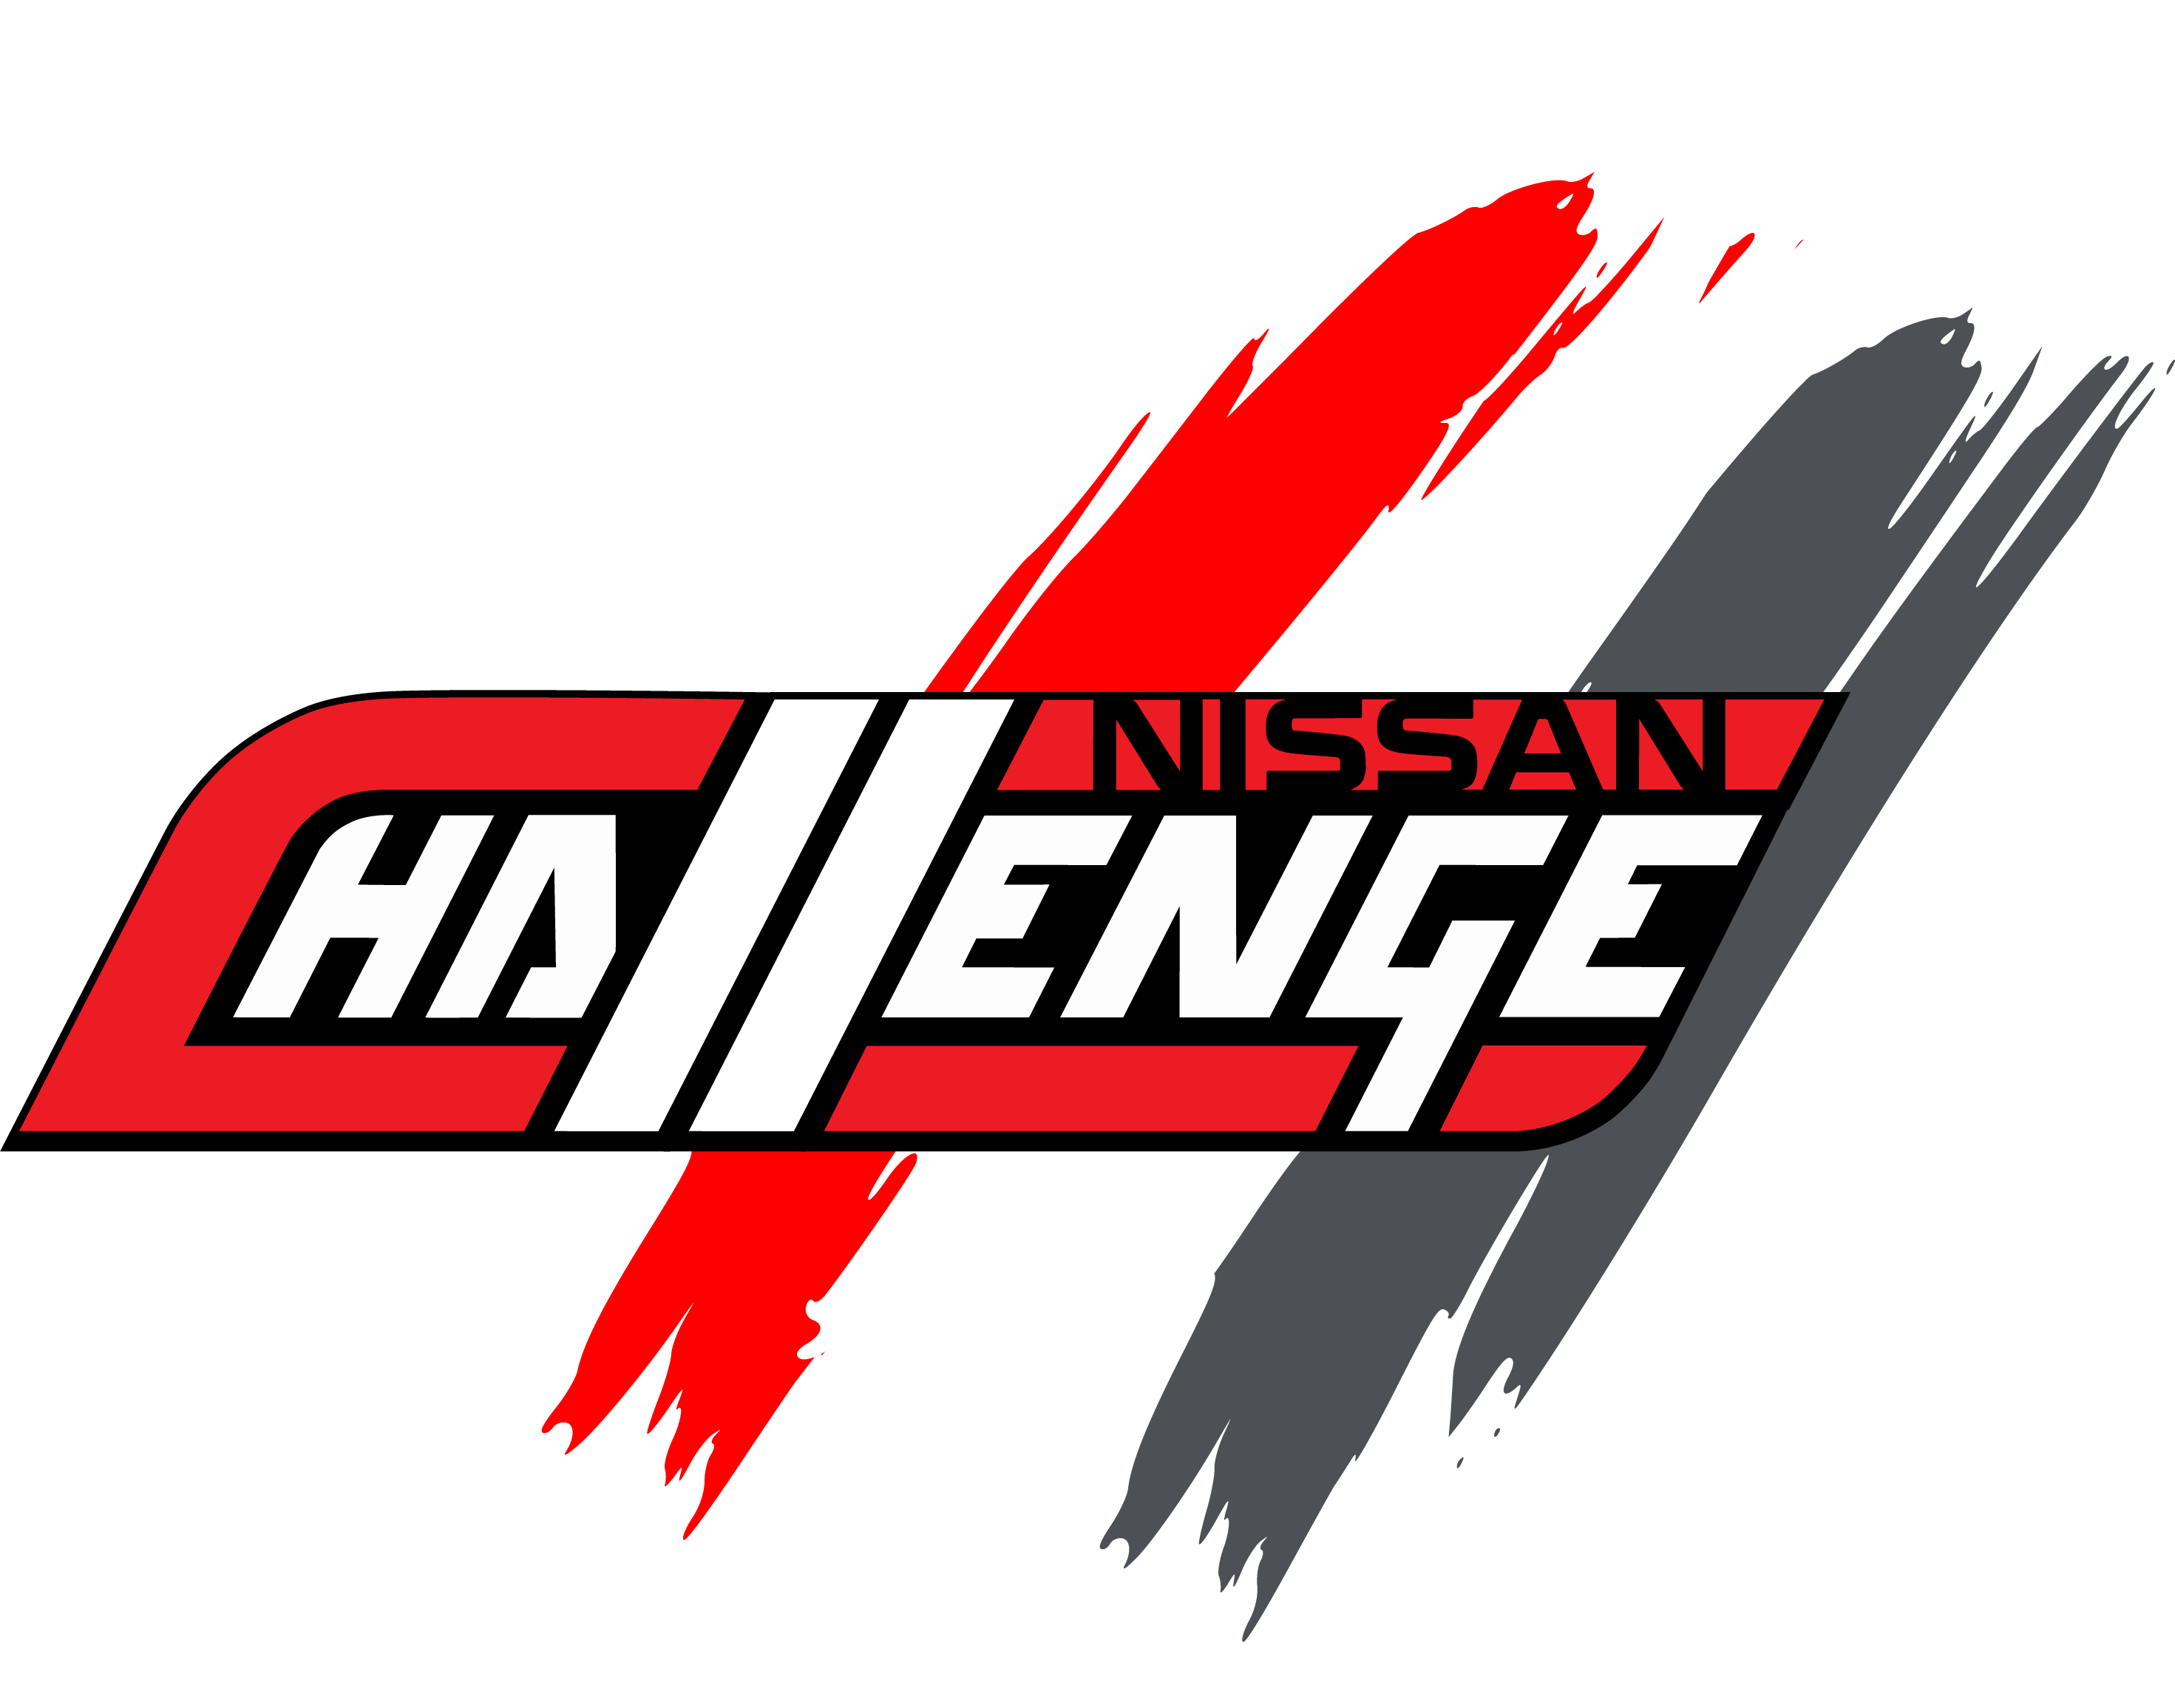 Nissan-Challenge-Logo - White